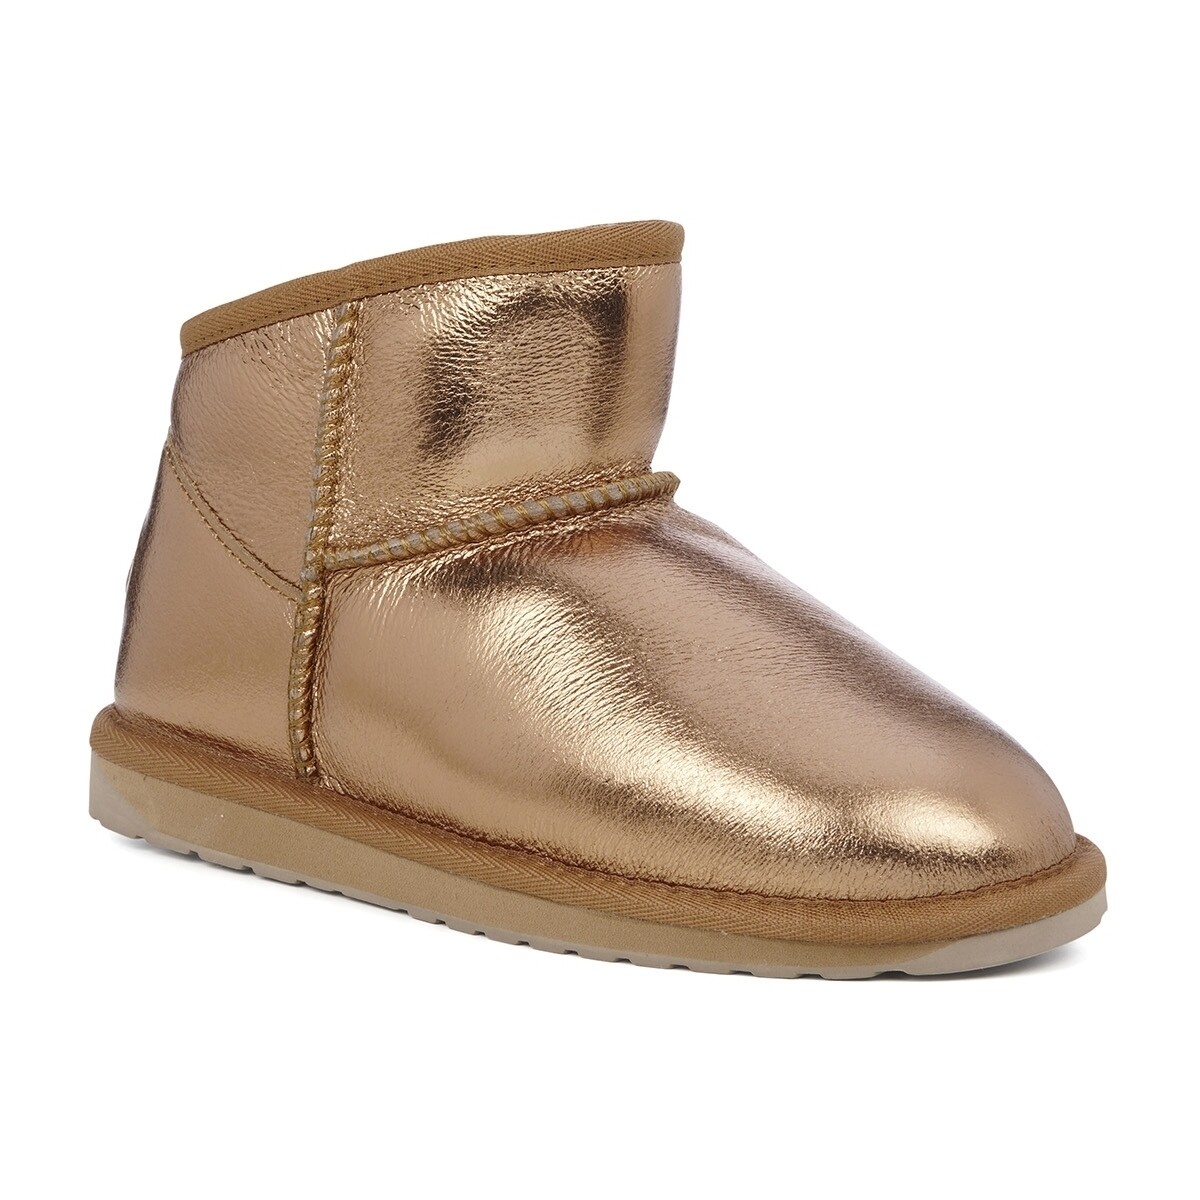 Schuhe Damen Low Boots EMU W12922-GOBR Gold